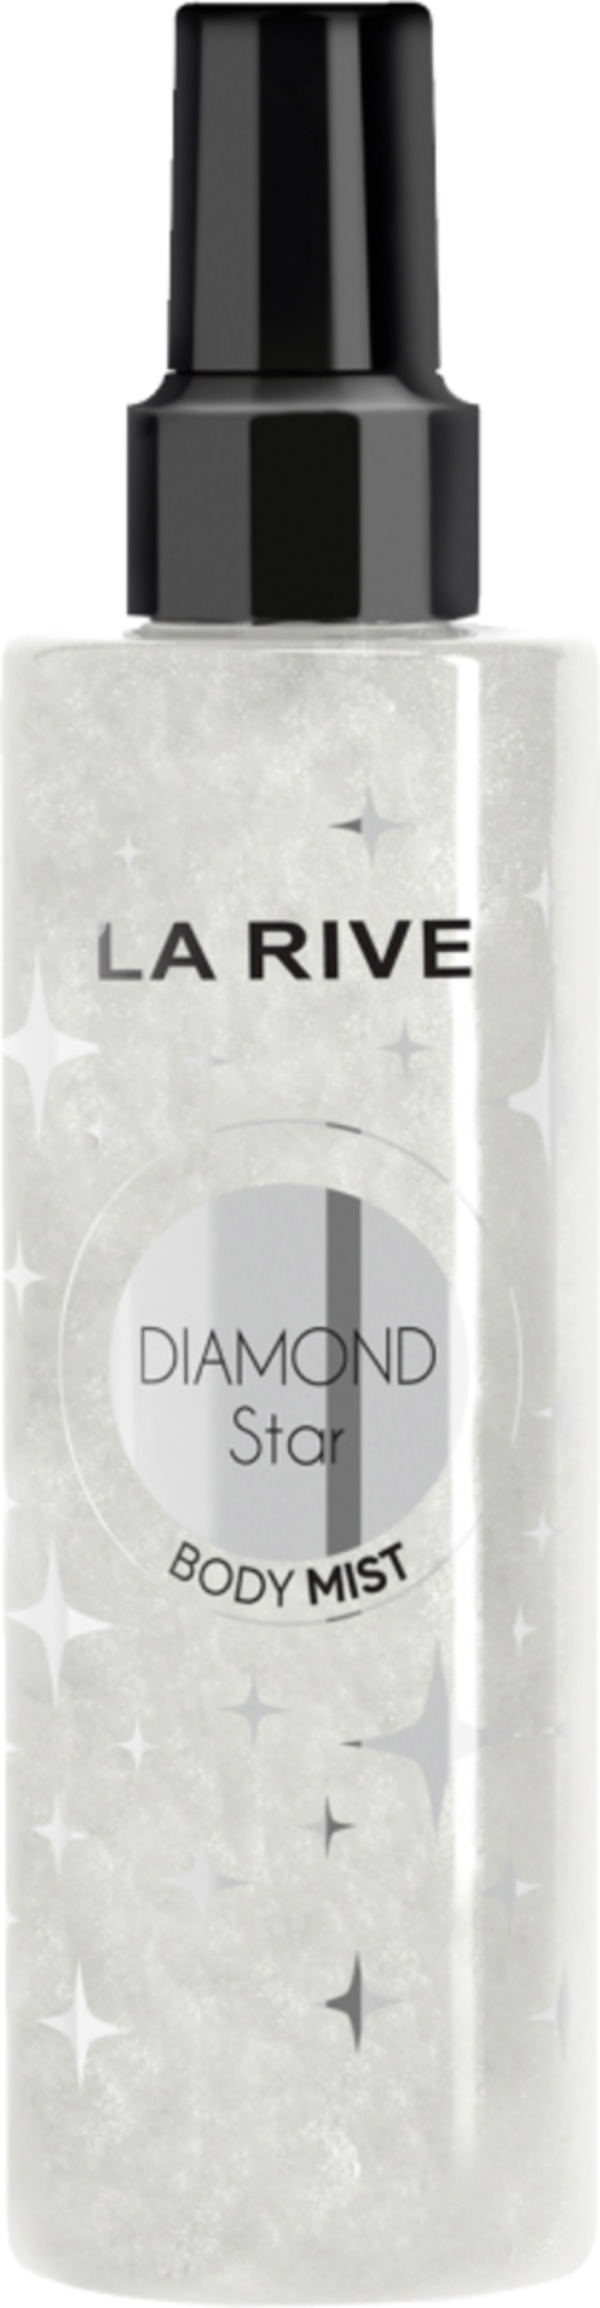 Bild 1 von LA RIVE Diamond Star, Body Mist 200 ml